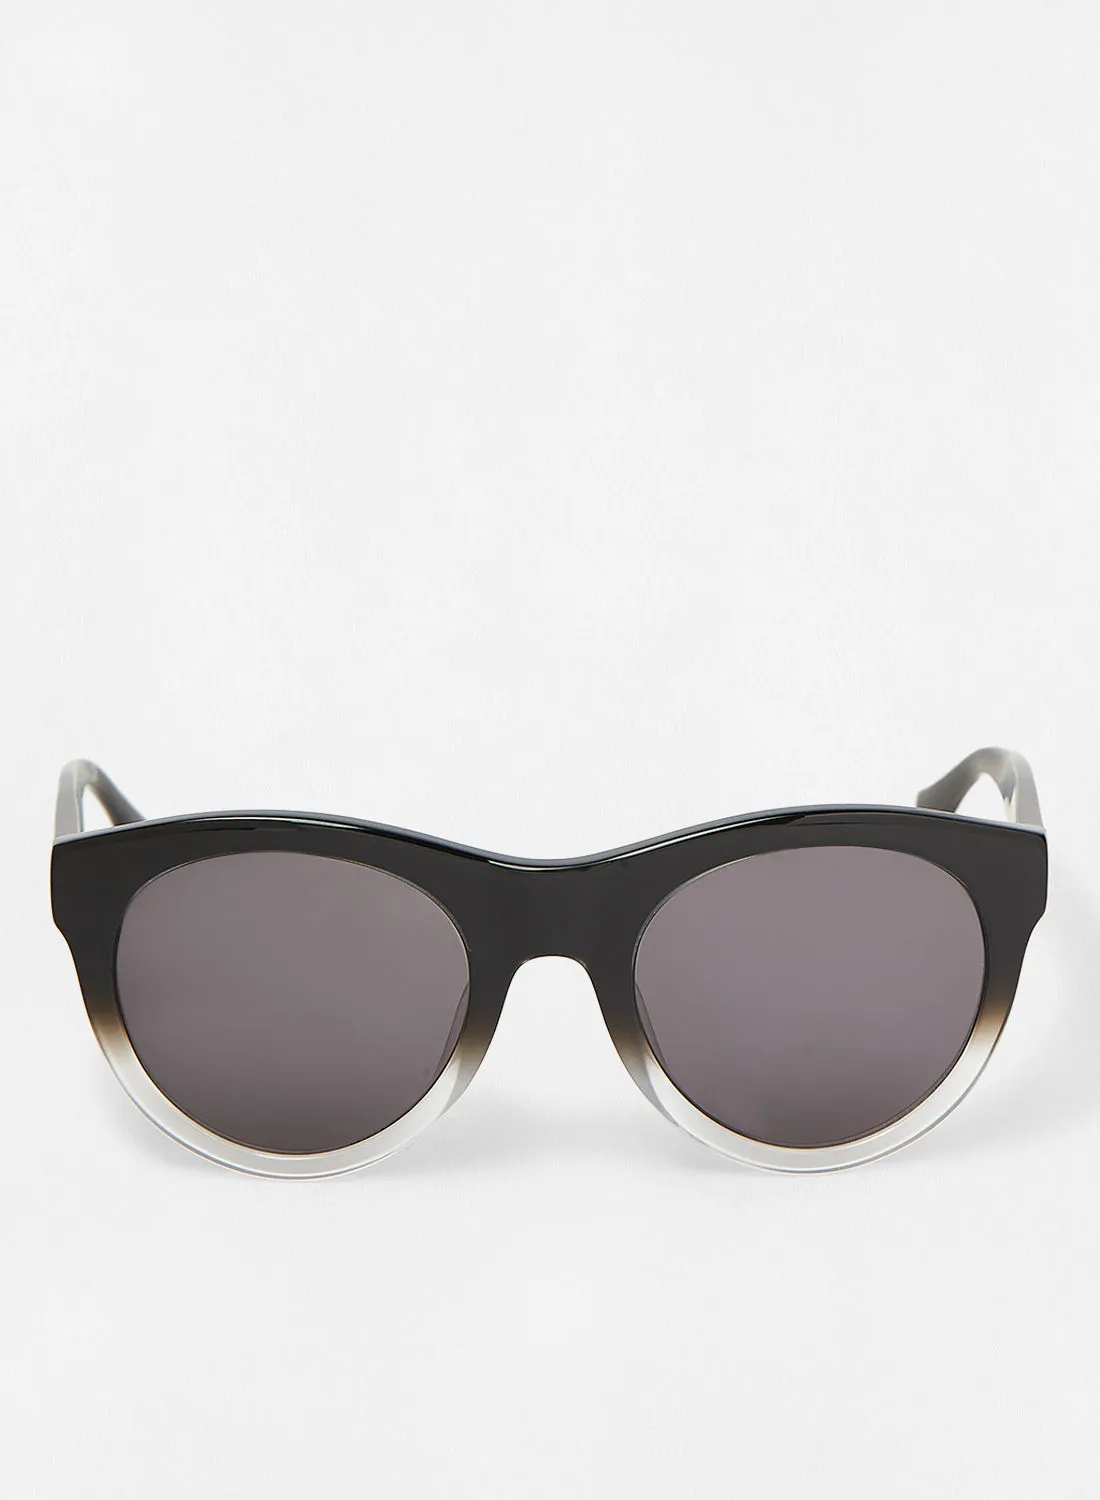 Donna Karan Women's Round Sunglasses